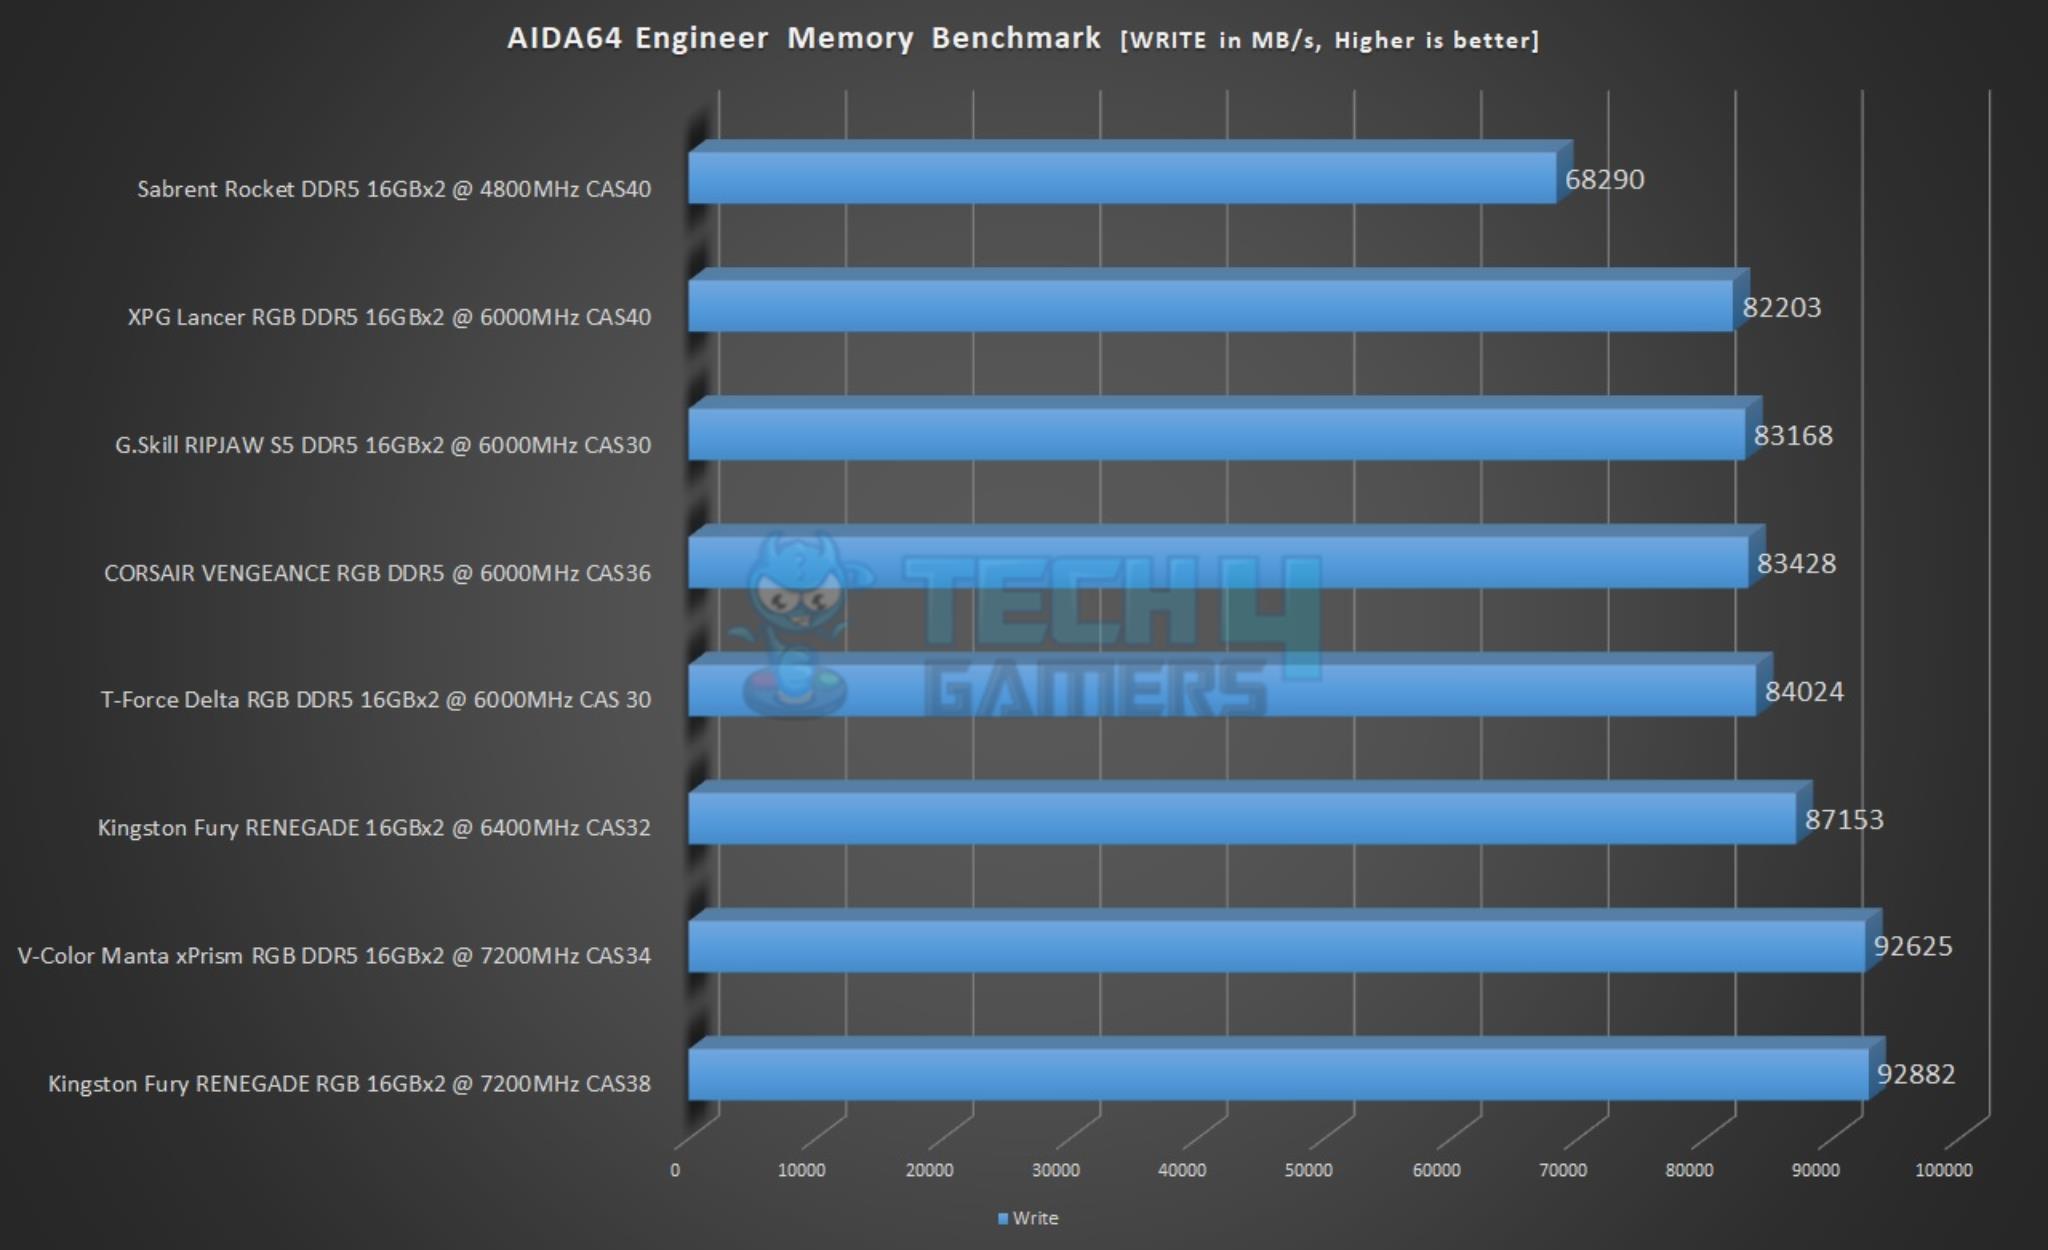 V-Color Manta xPrism RGB DDR5 32GB — AIDA64 Memory Write Benchmark